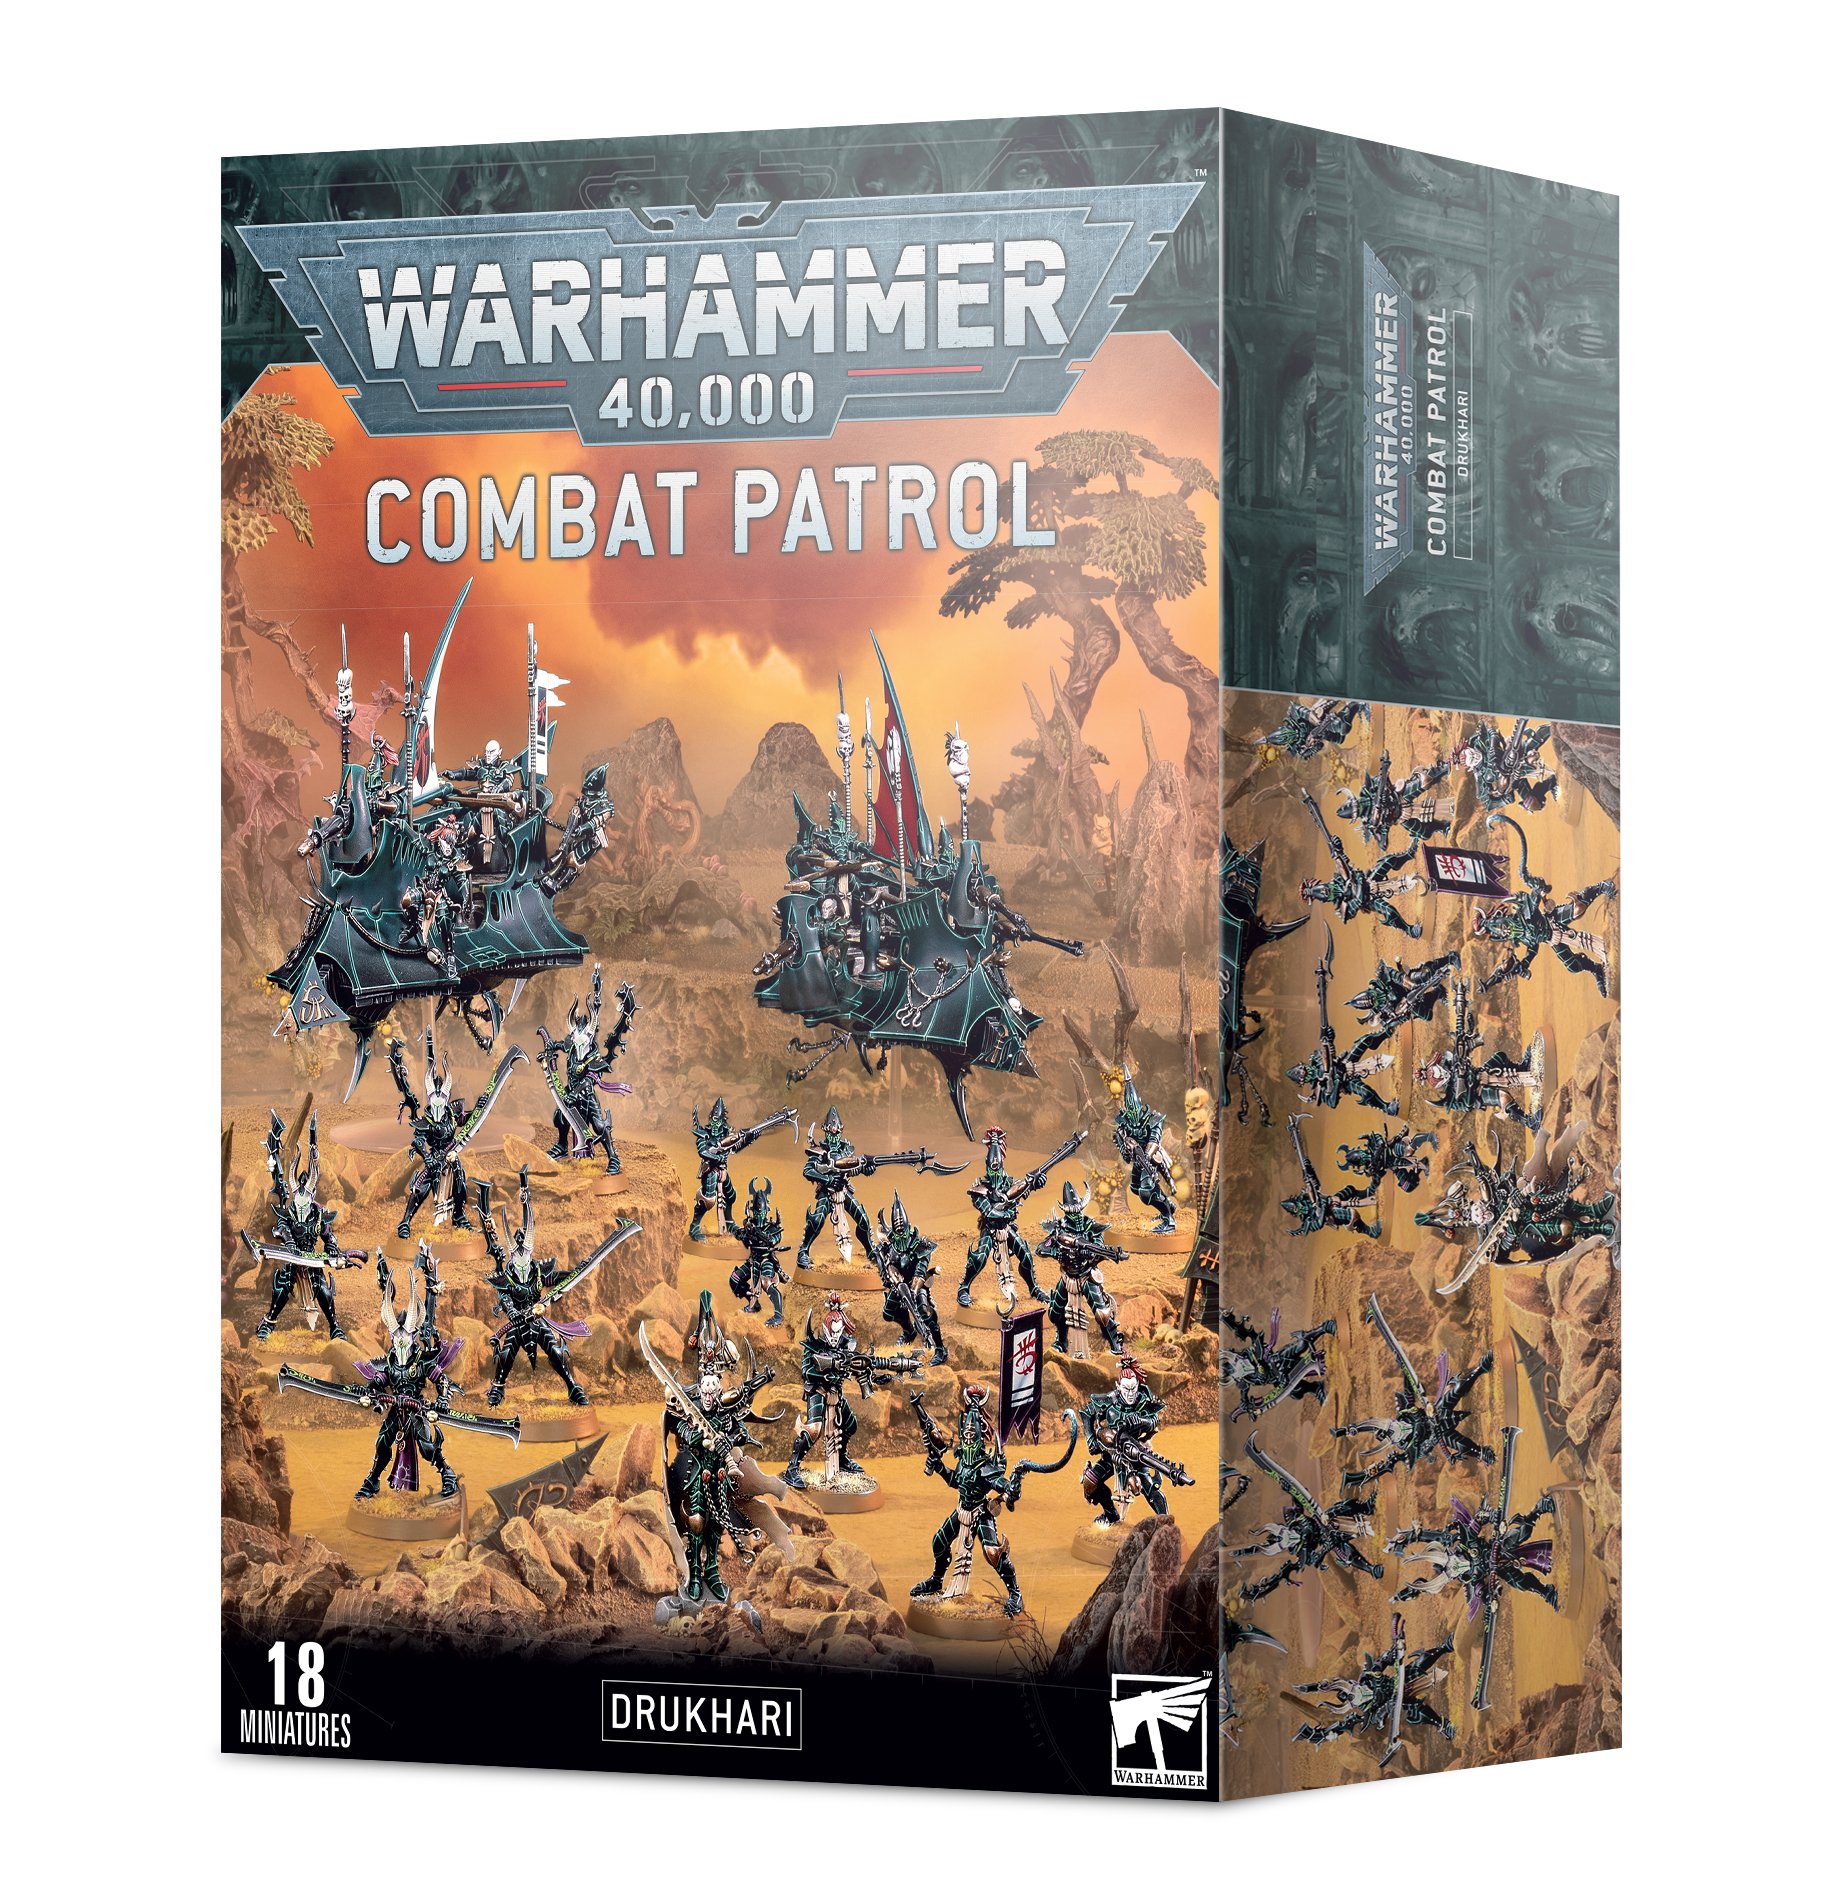 Warhammer 40,000: Combat Patrol: Drukhari 